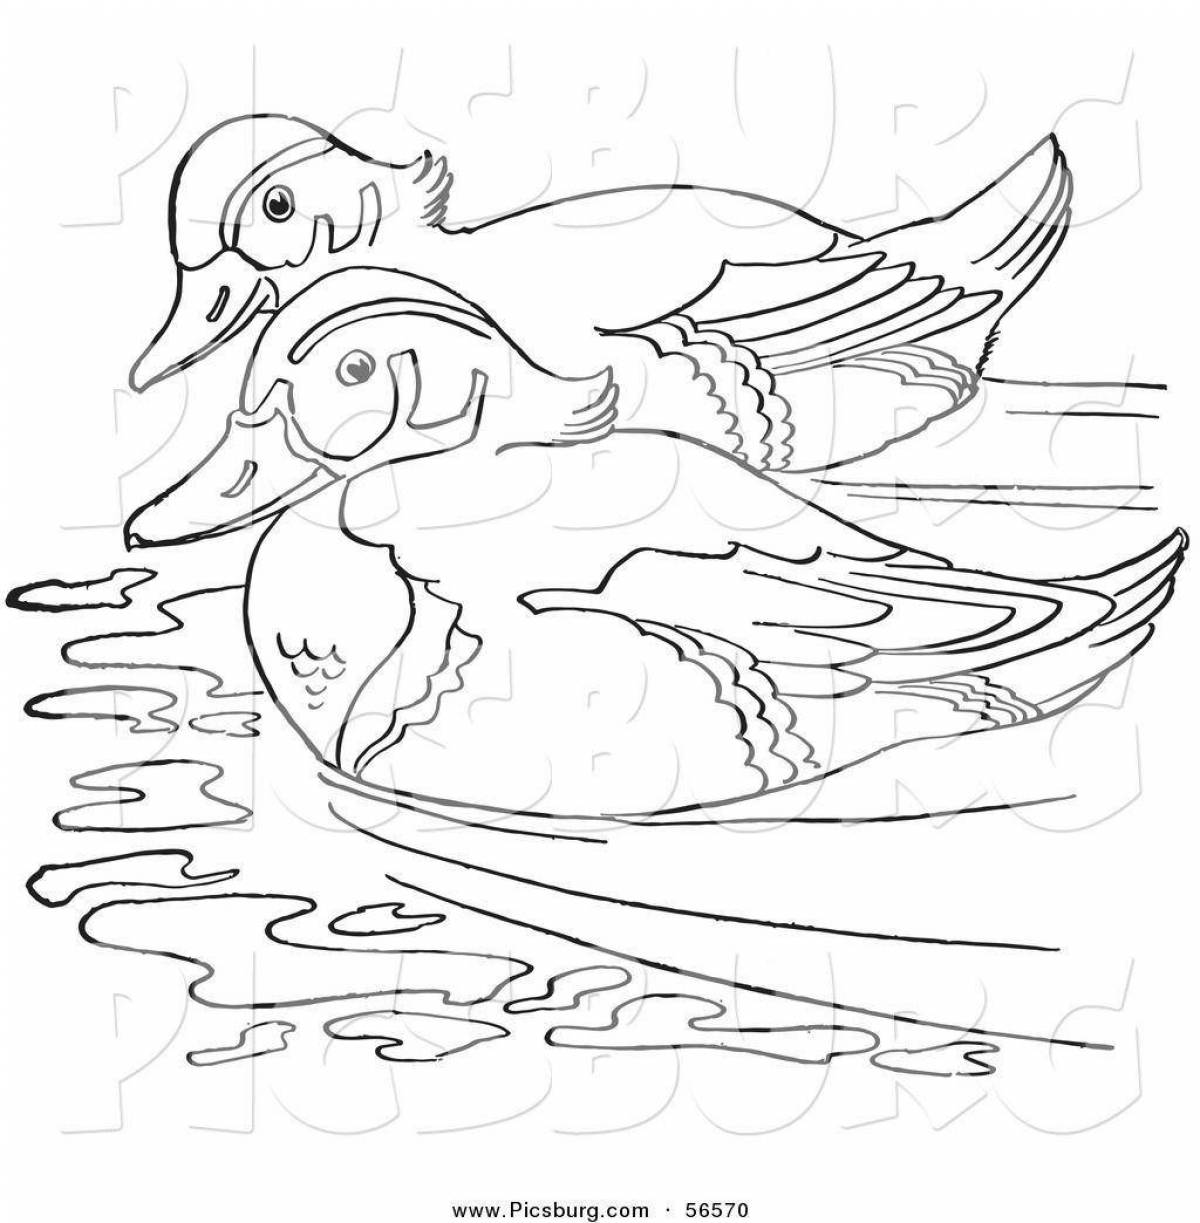 Vibrant mandarin duck coloring page